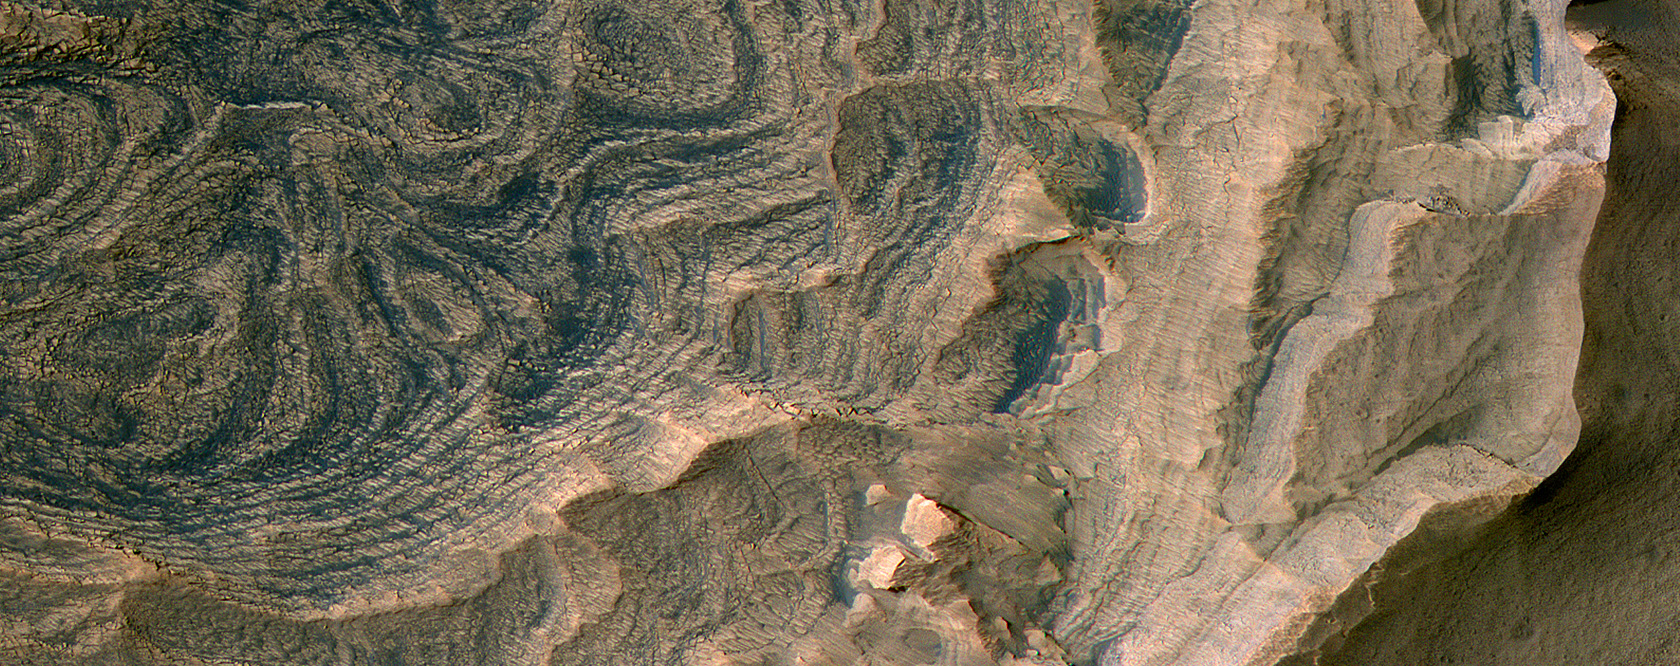 Layered Sedimentary Rocks in Candor Chasma